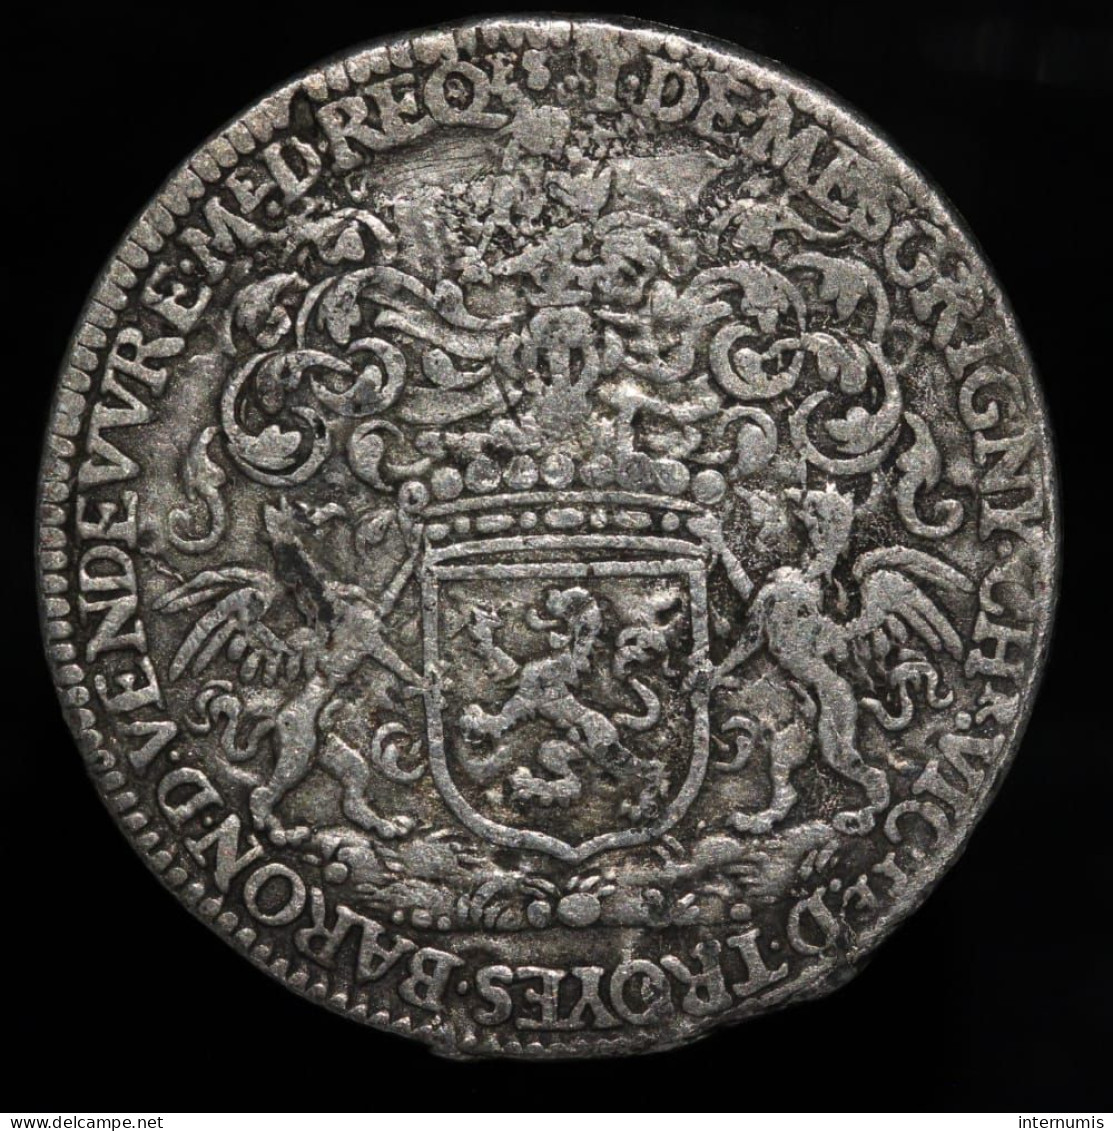 RARE - France, BOURGOGNE, Jean De Mesgrigny & Huberte D’Inteville, 1642, Cuivre Argenté (Silver Plated Copper) - Monarquía / Nobleza